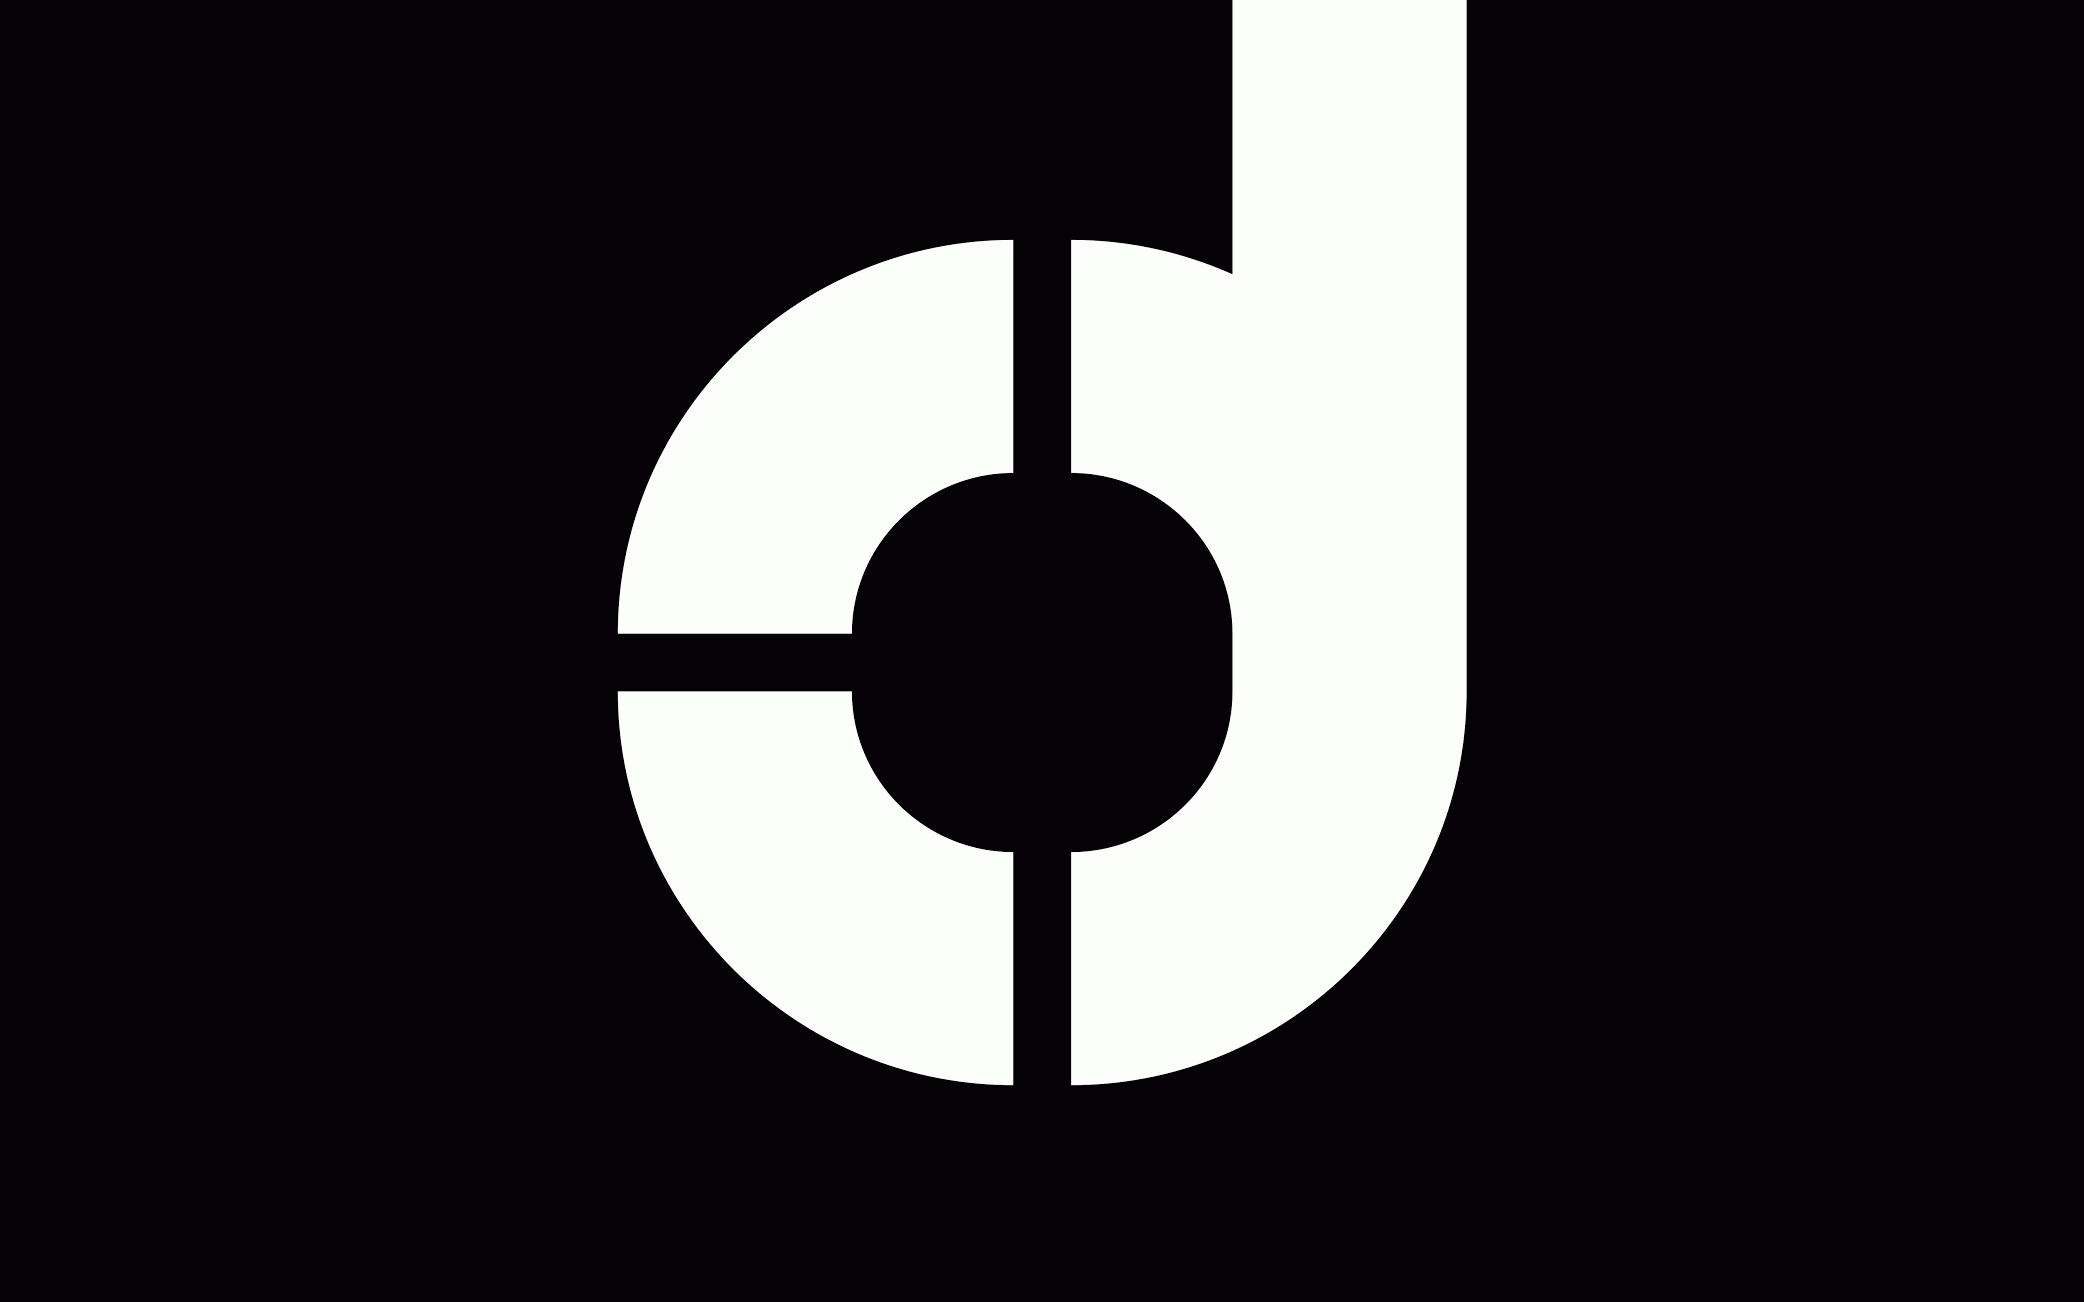 design museum rebranding by BOND